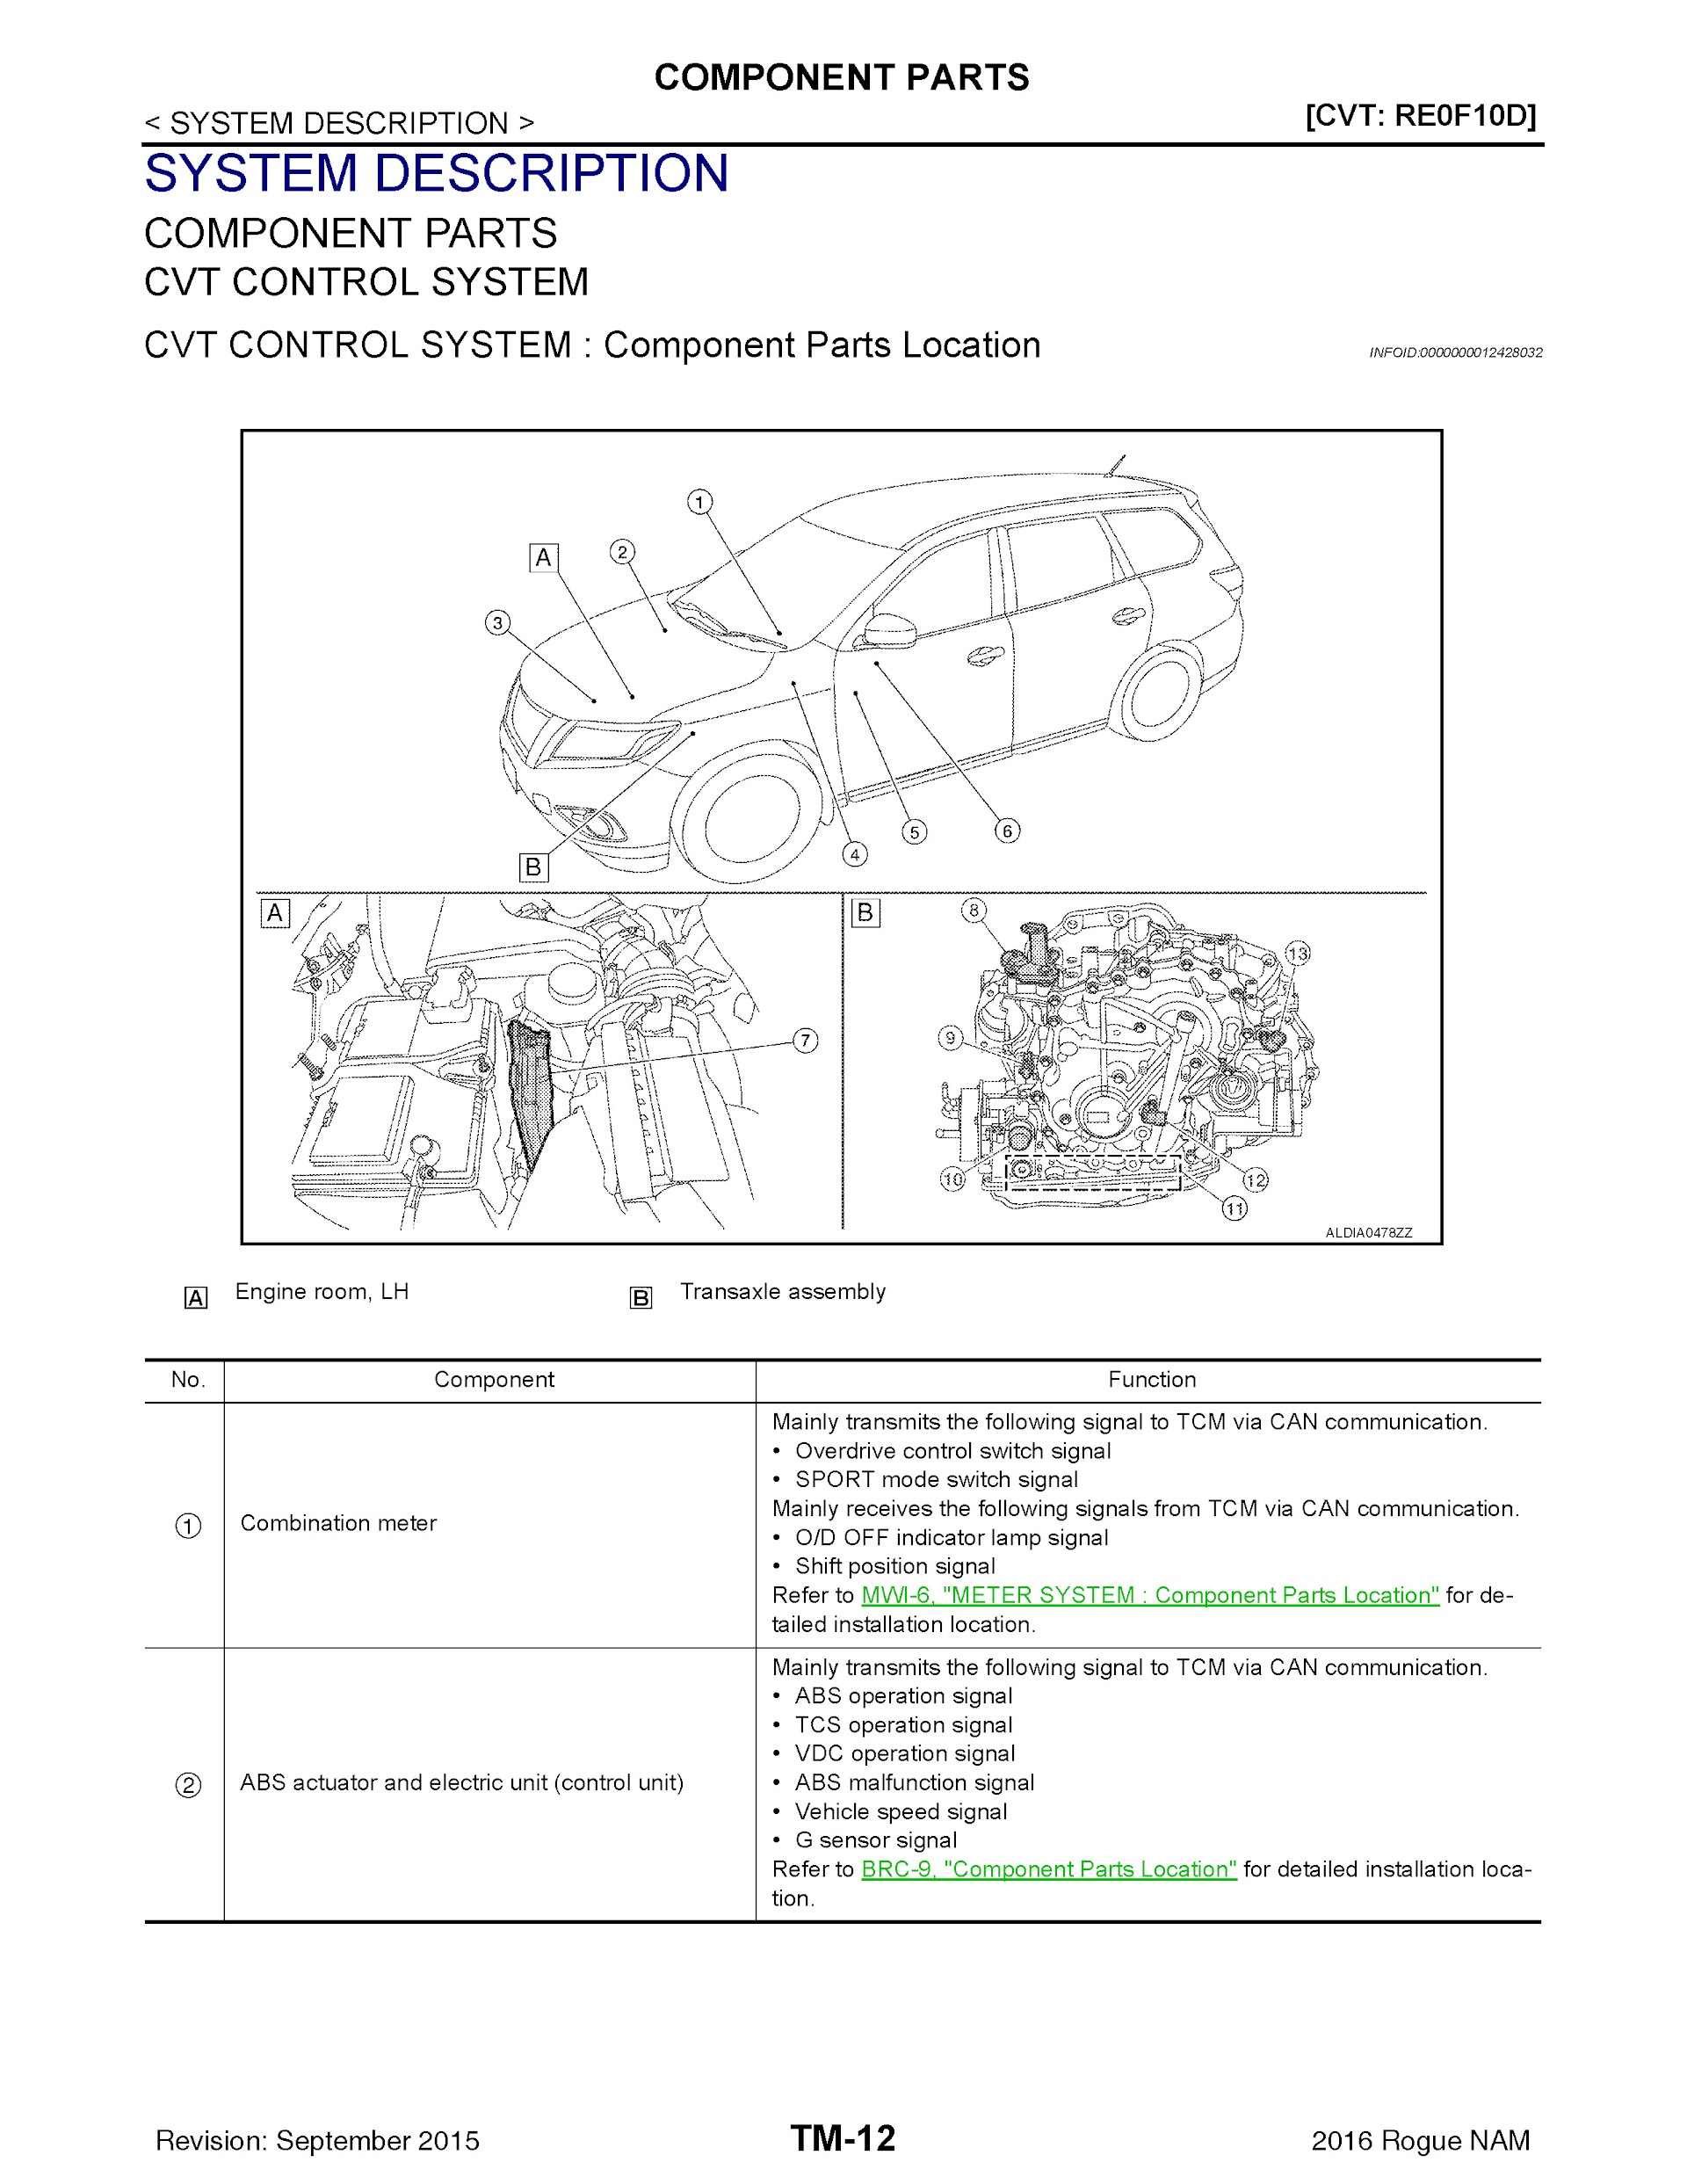 2016 Nissan Rogue T32 Repair Manual, CVT Control System